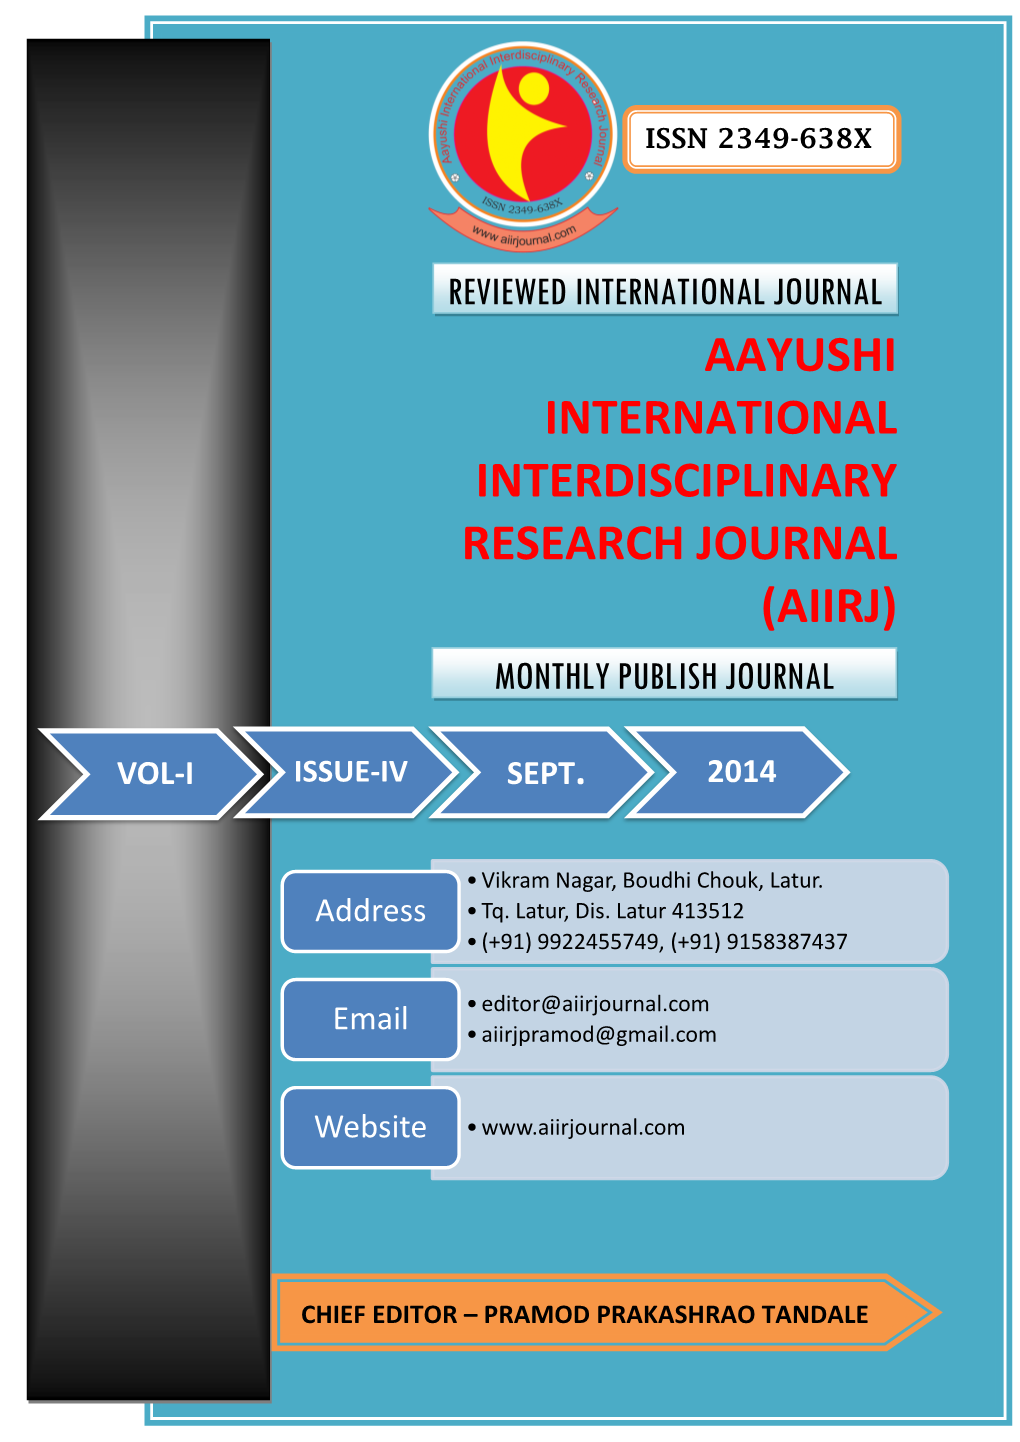 Aayushi International Interdisciplinary Research Journal (AIIRJ) Vol - I Issue - IV SEPTEMBER 2014 Monthly ISSN 2349-638X